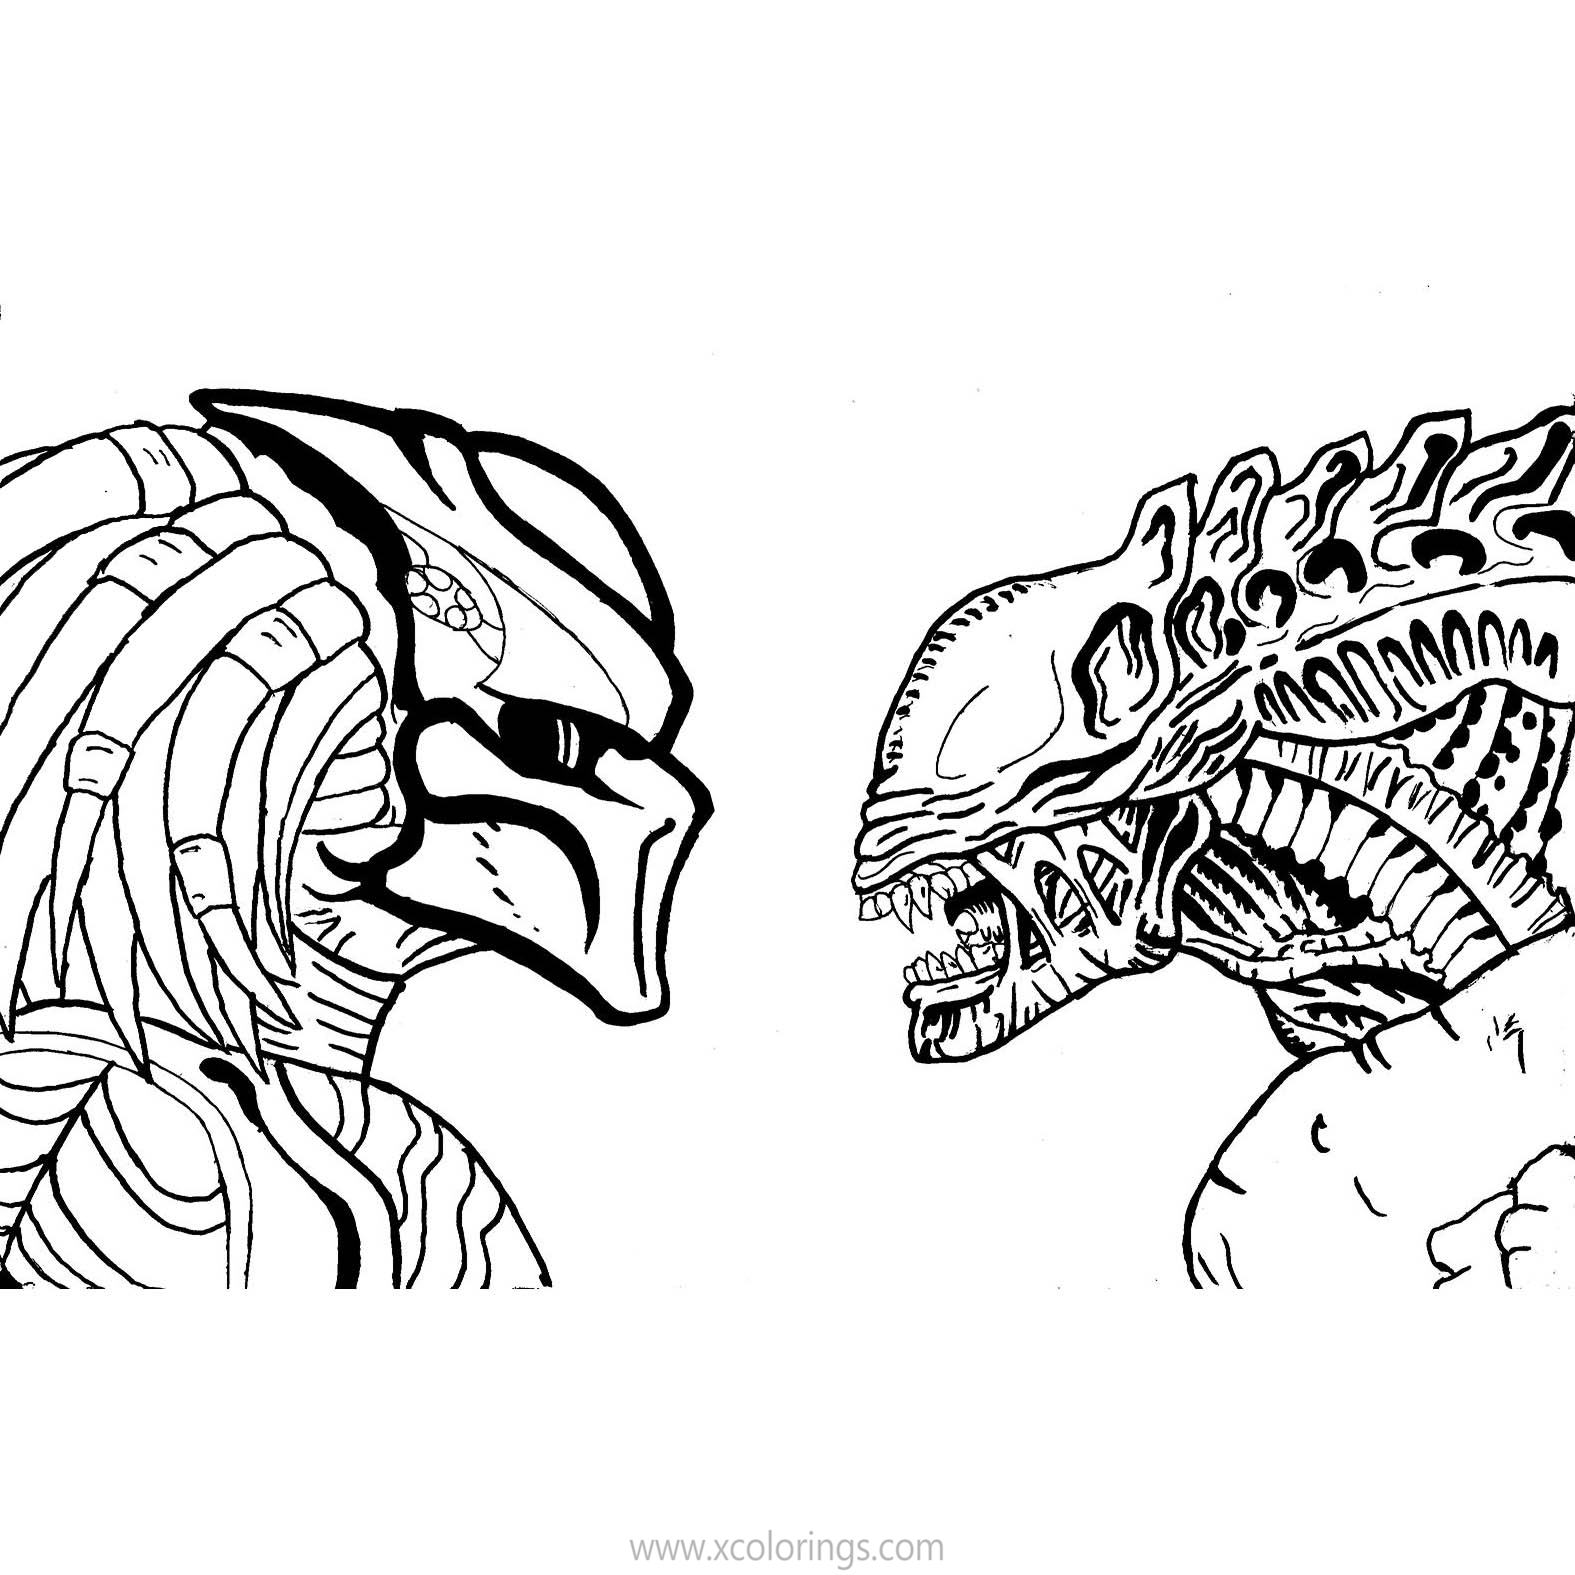 Free Alien VS Predator Coloring Pages Linear printable